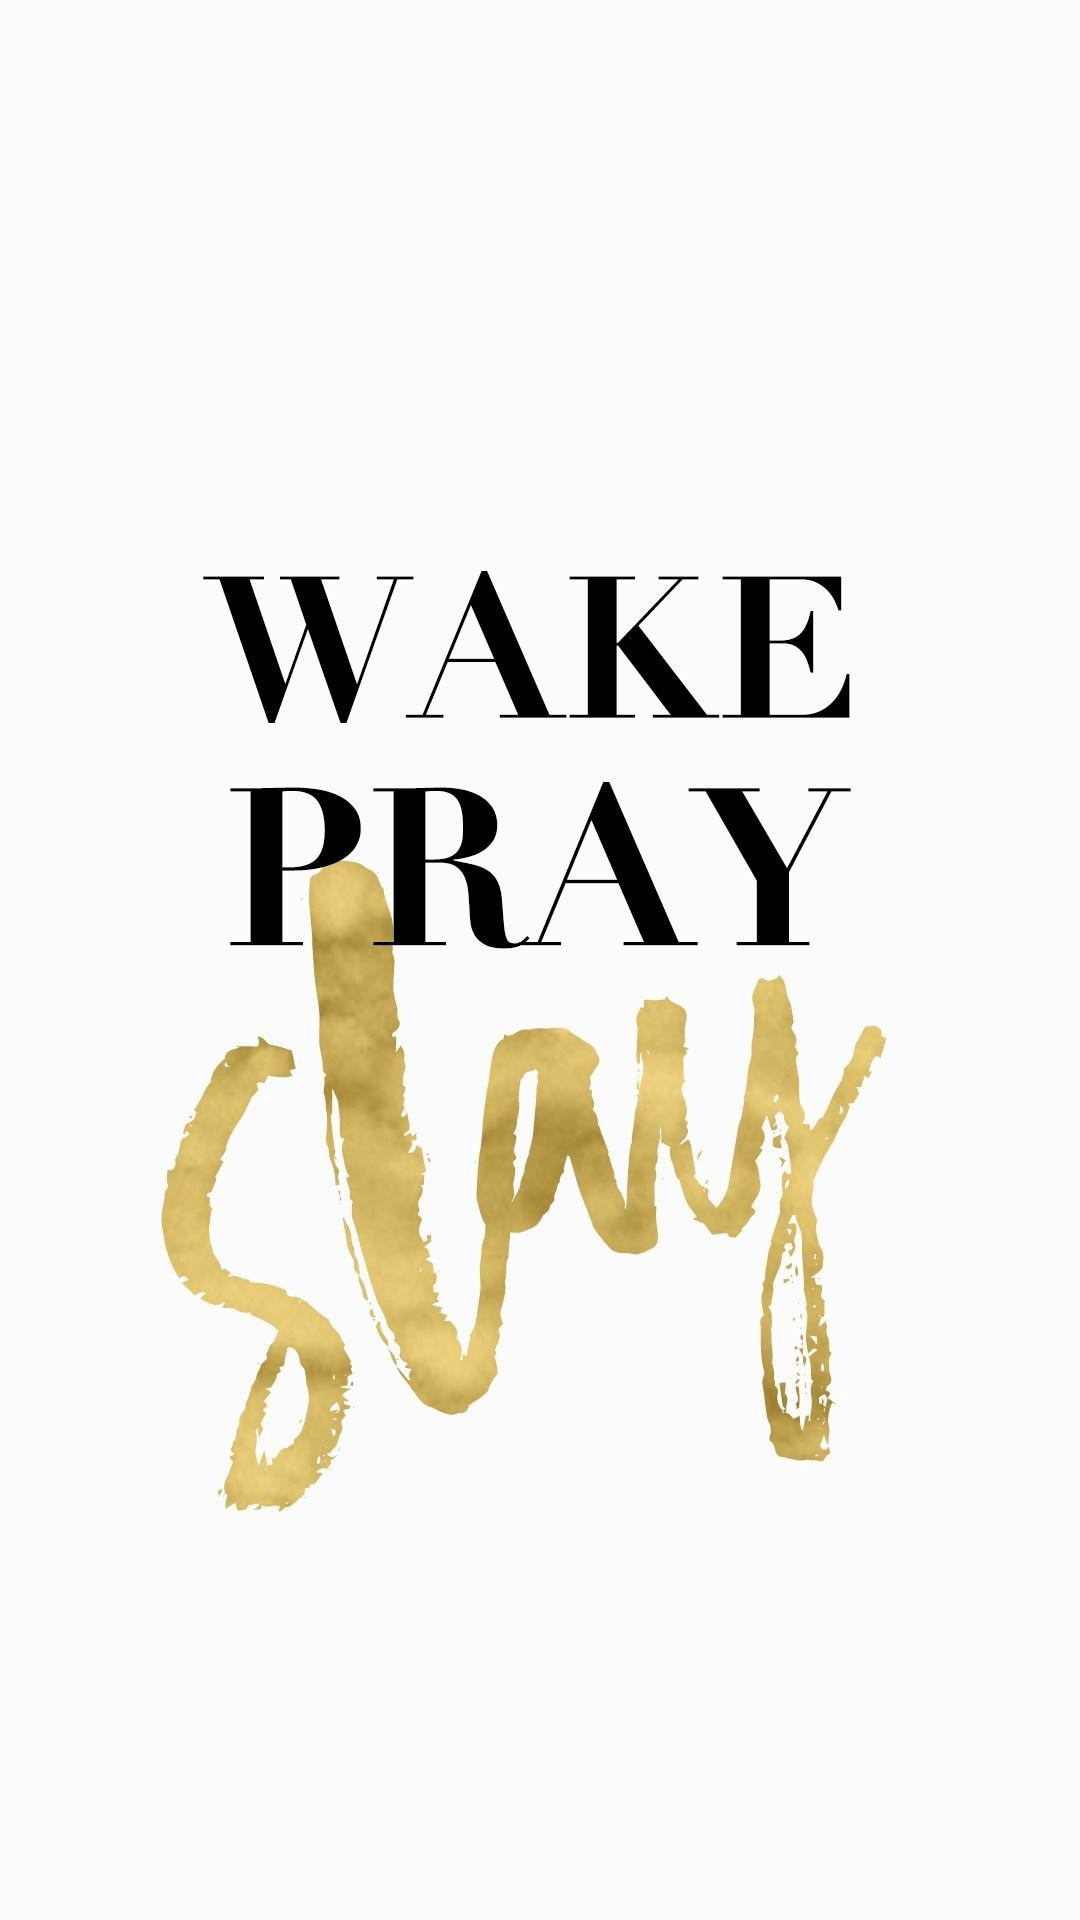 Wake pray slaygold black and white